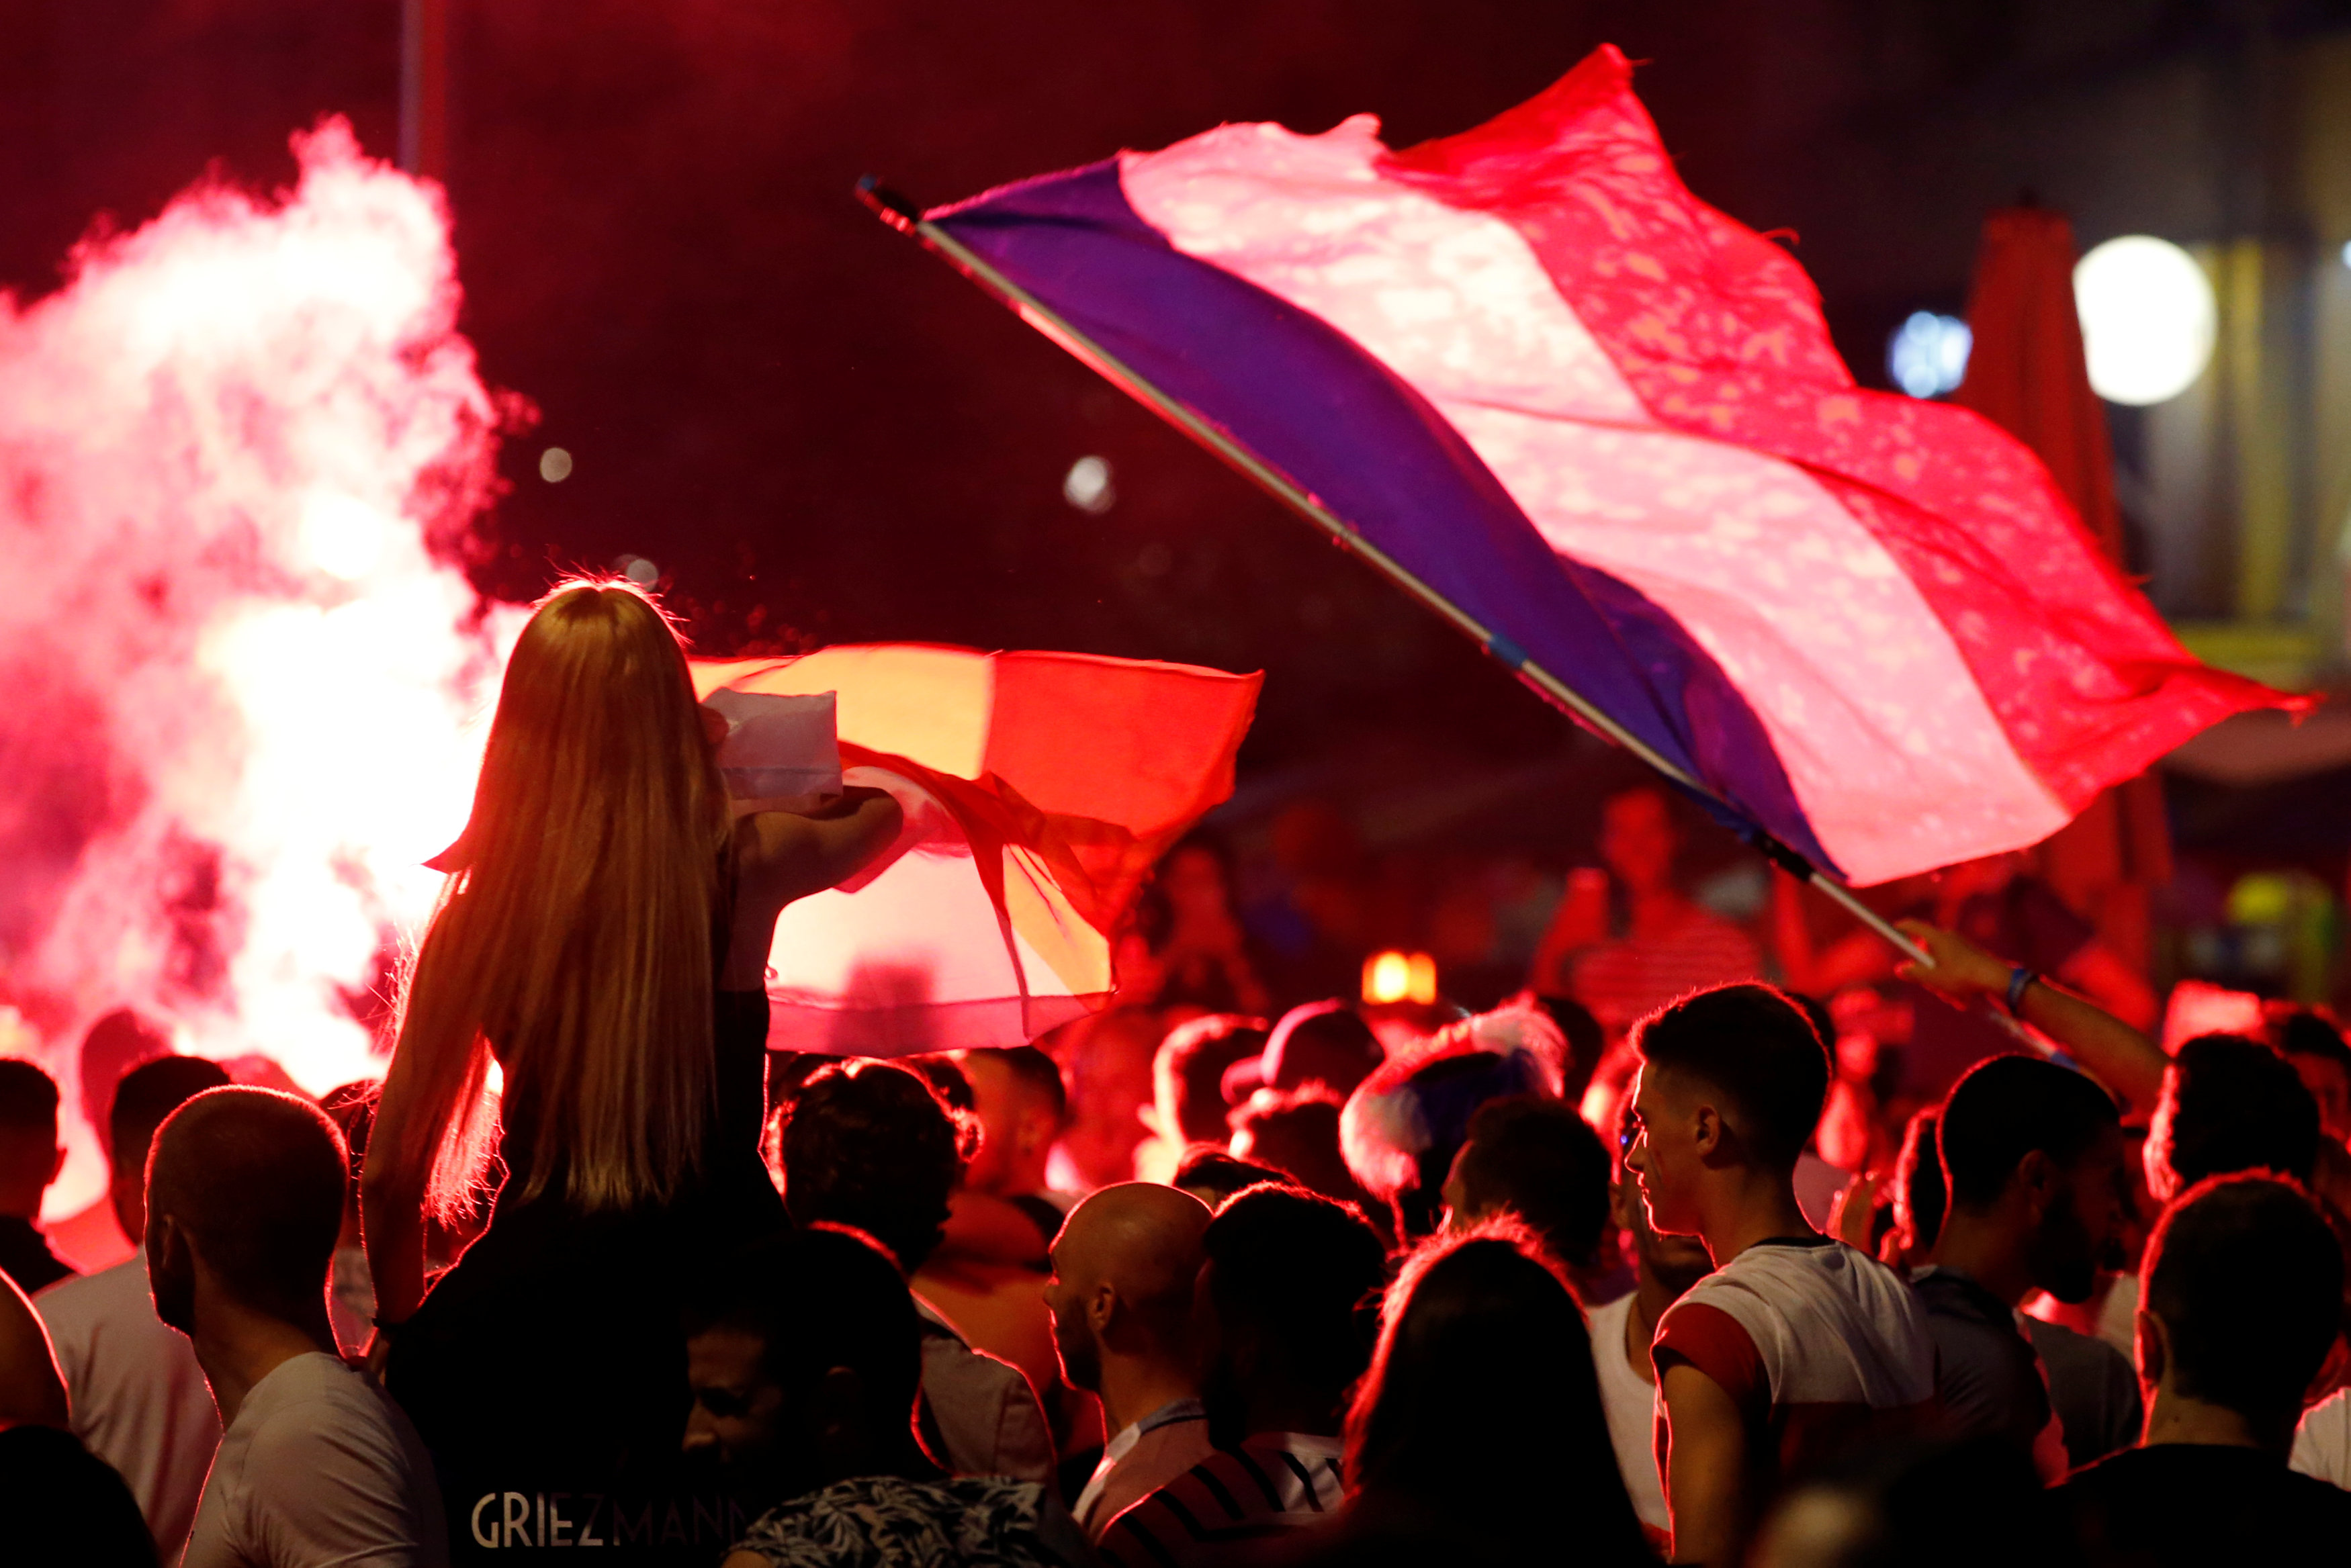 How to watch France vs Croatia